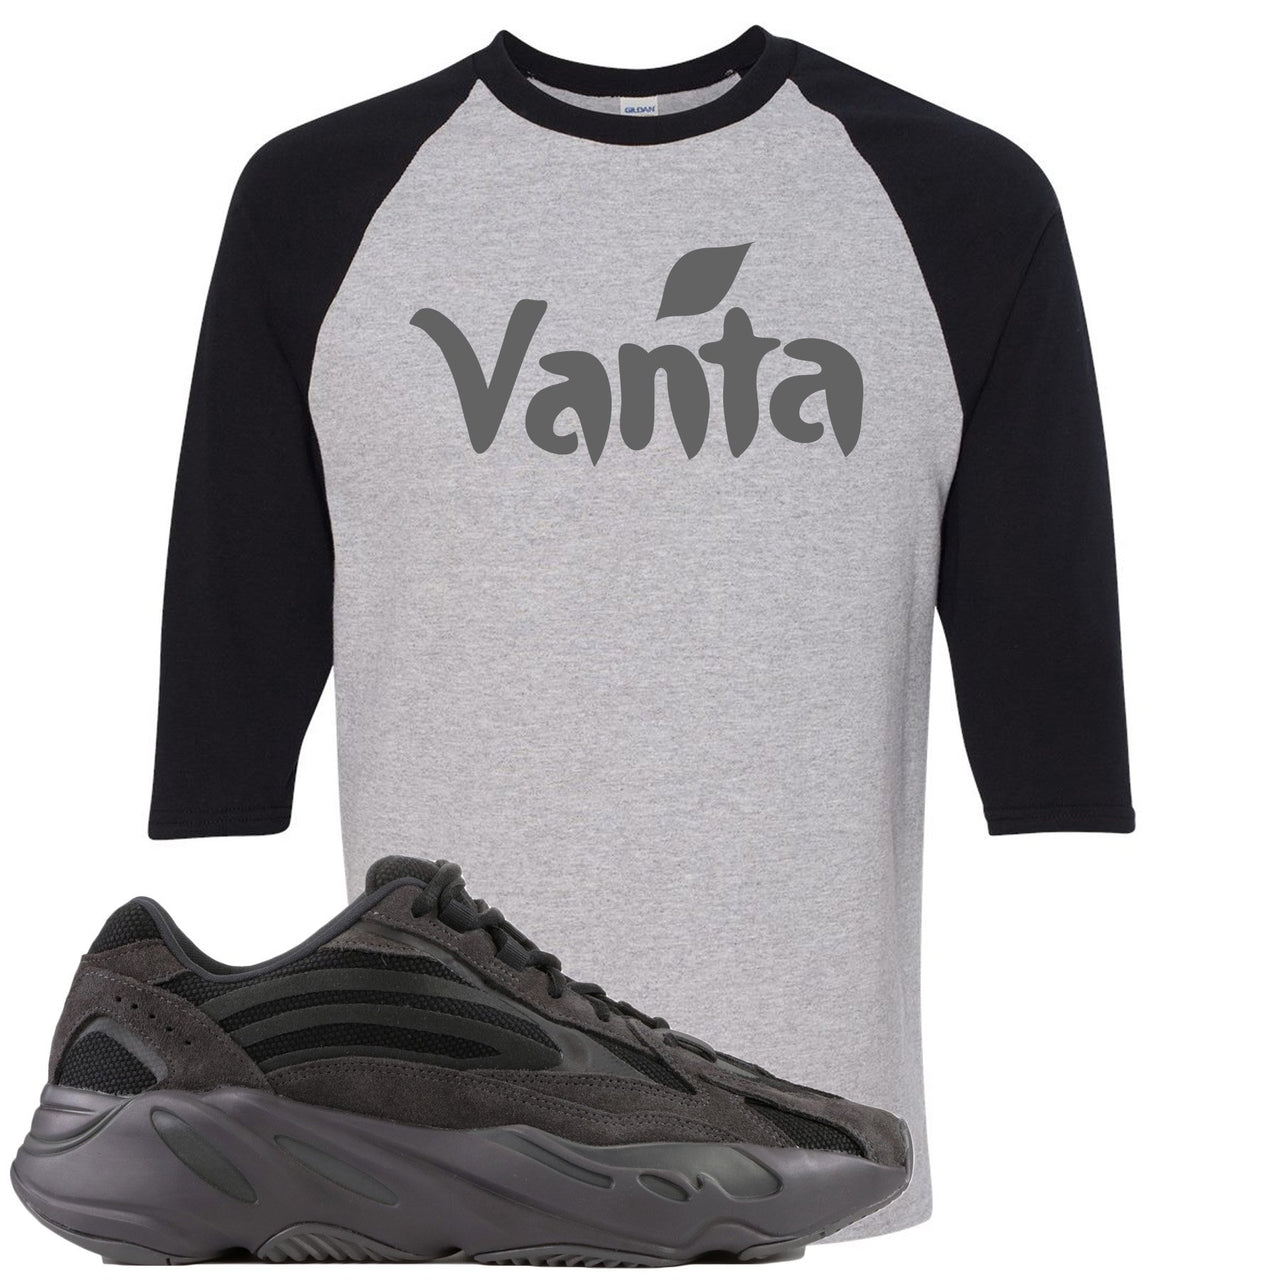 Vanta v2 700s Raglan T Shirt | Vanta, Sports Gray and Black